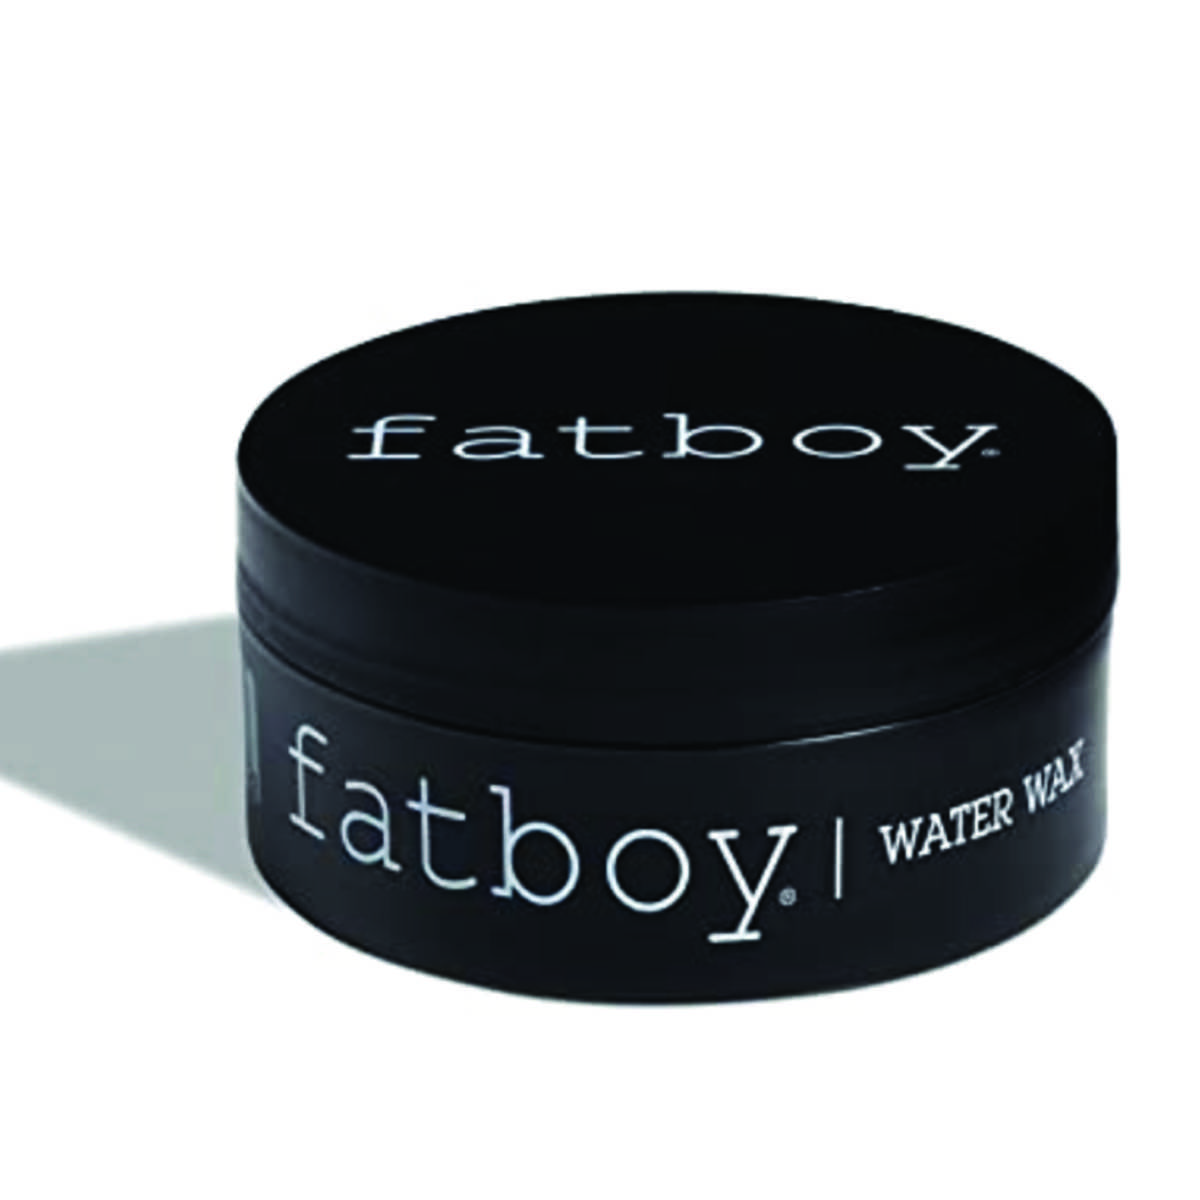 Fatboy Tough Guy Water Wax - Sullivan Beauty